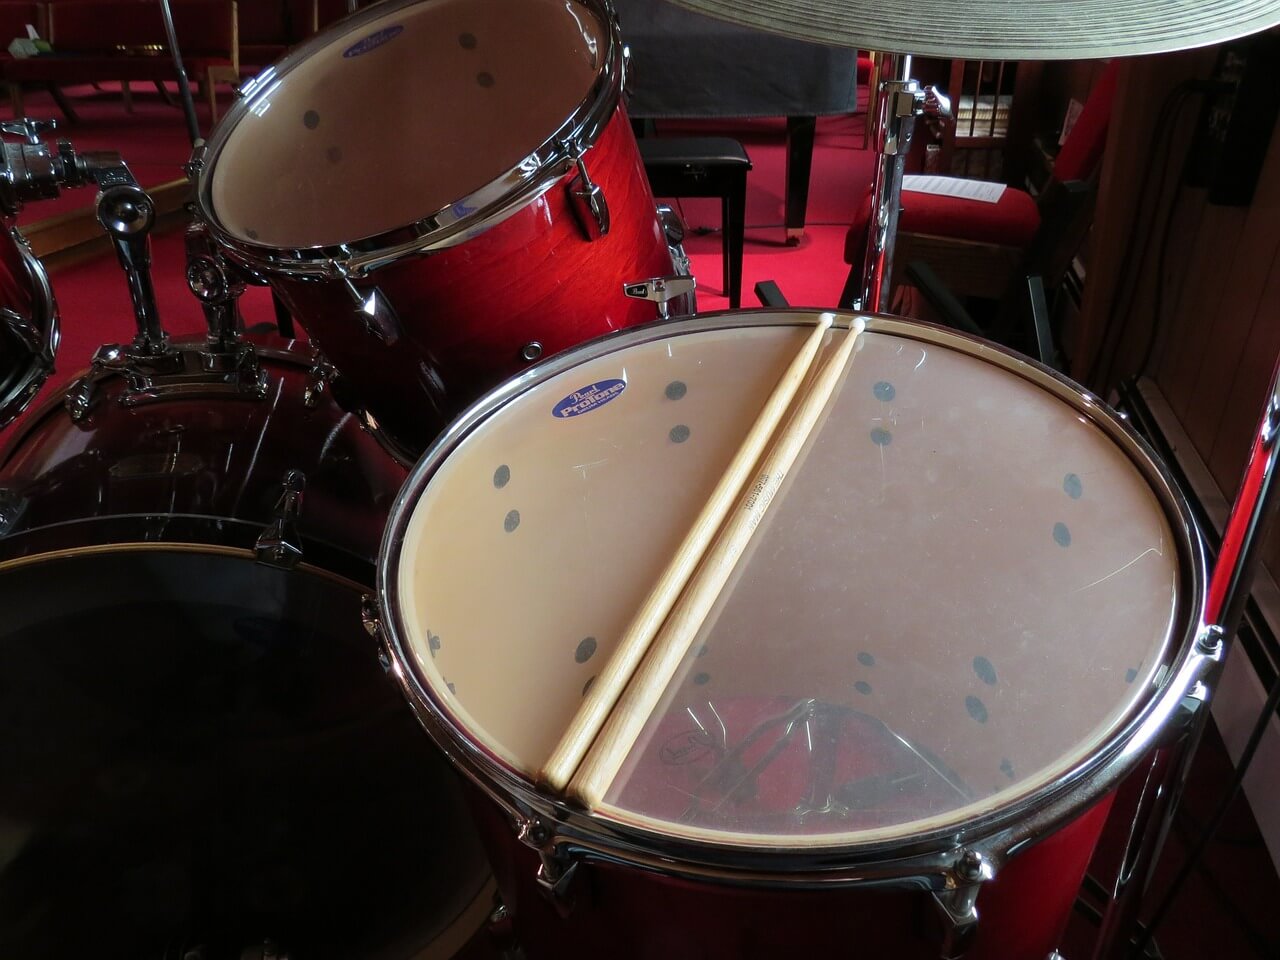 drumming techniques